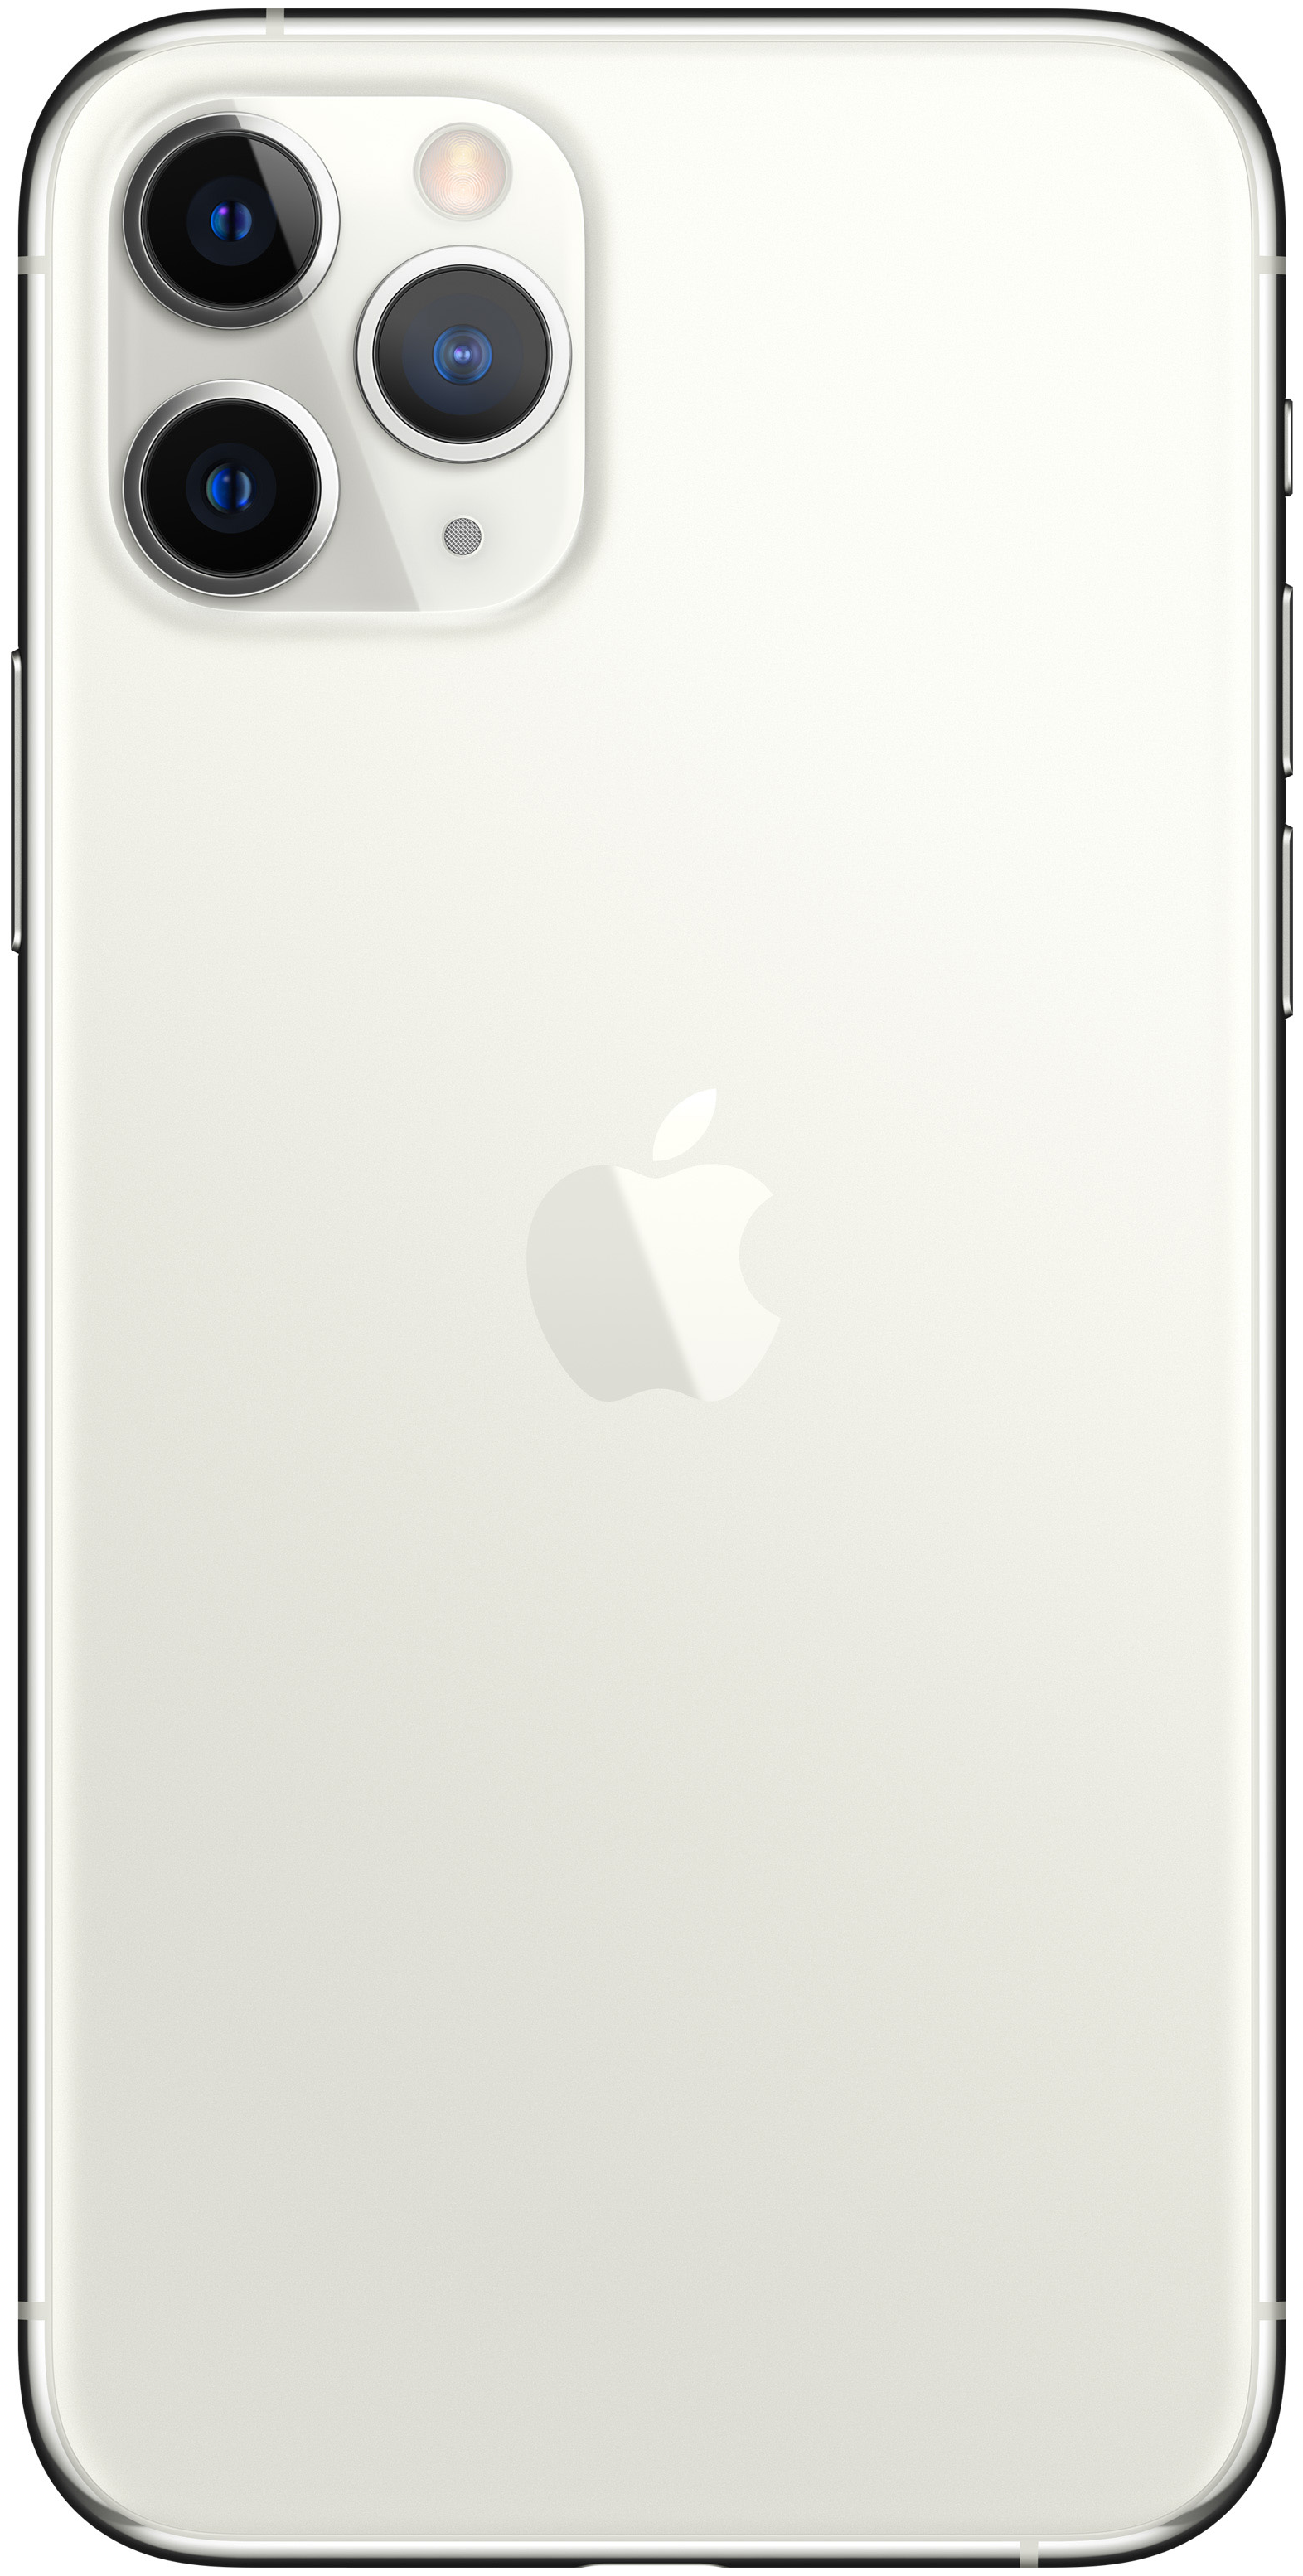 Apple iPhone 11 Pro 512GB - беспроводные интерфейсы: NFC, Wi-Fi, Bluetooth 5.0